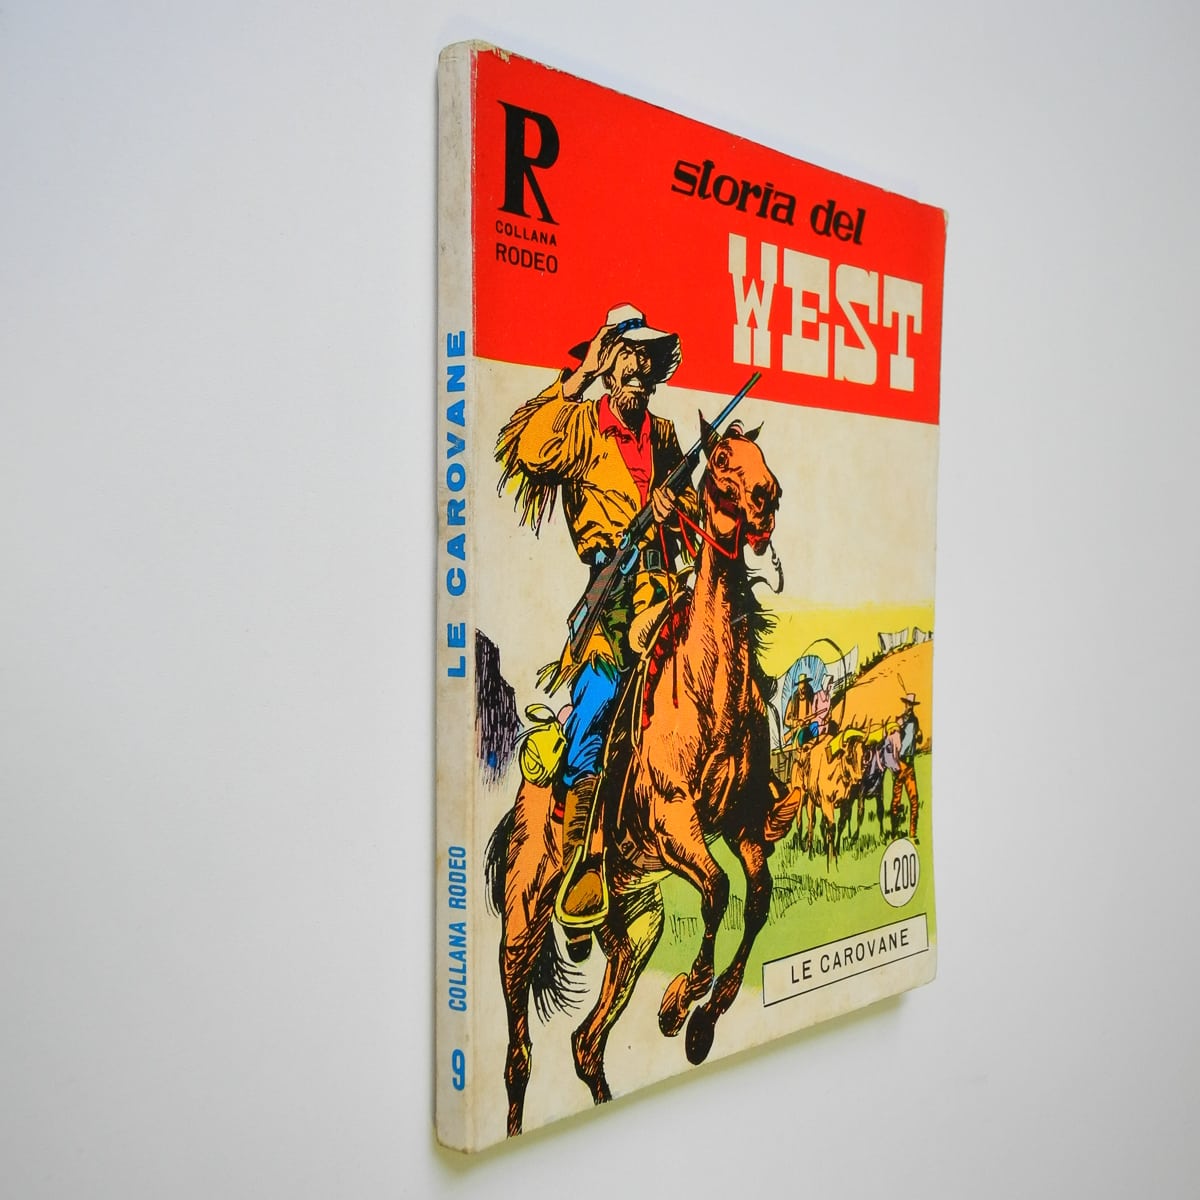 Collana Rodeo n. 9 Storia del West Le carovane